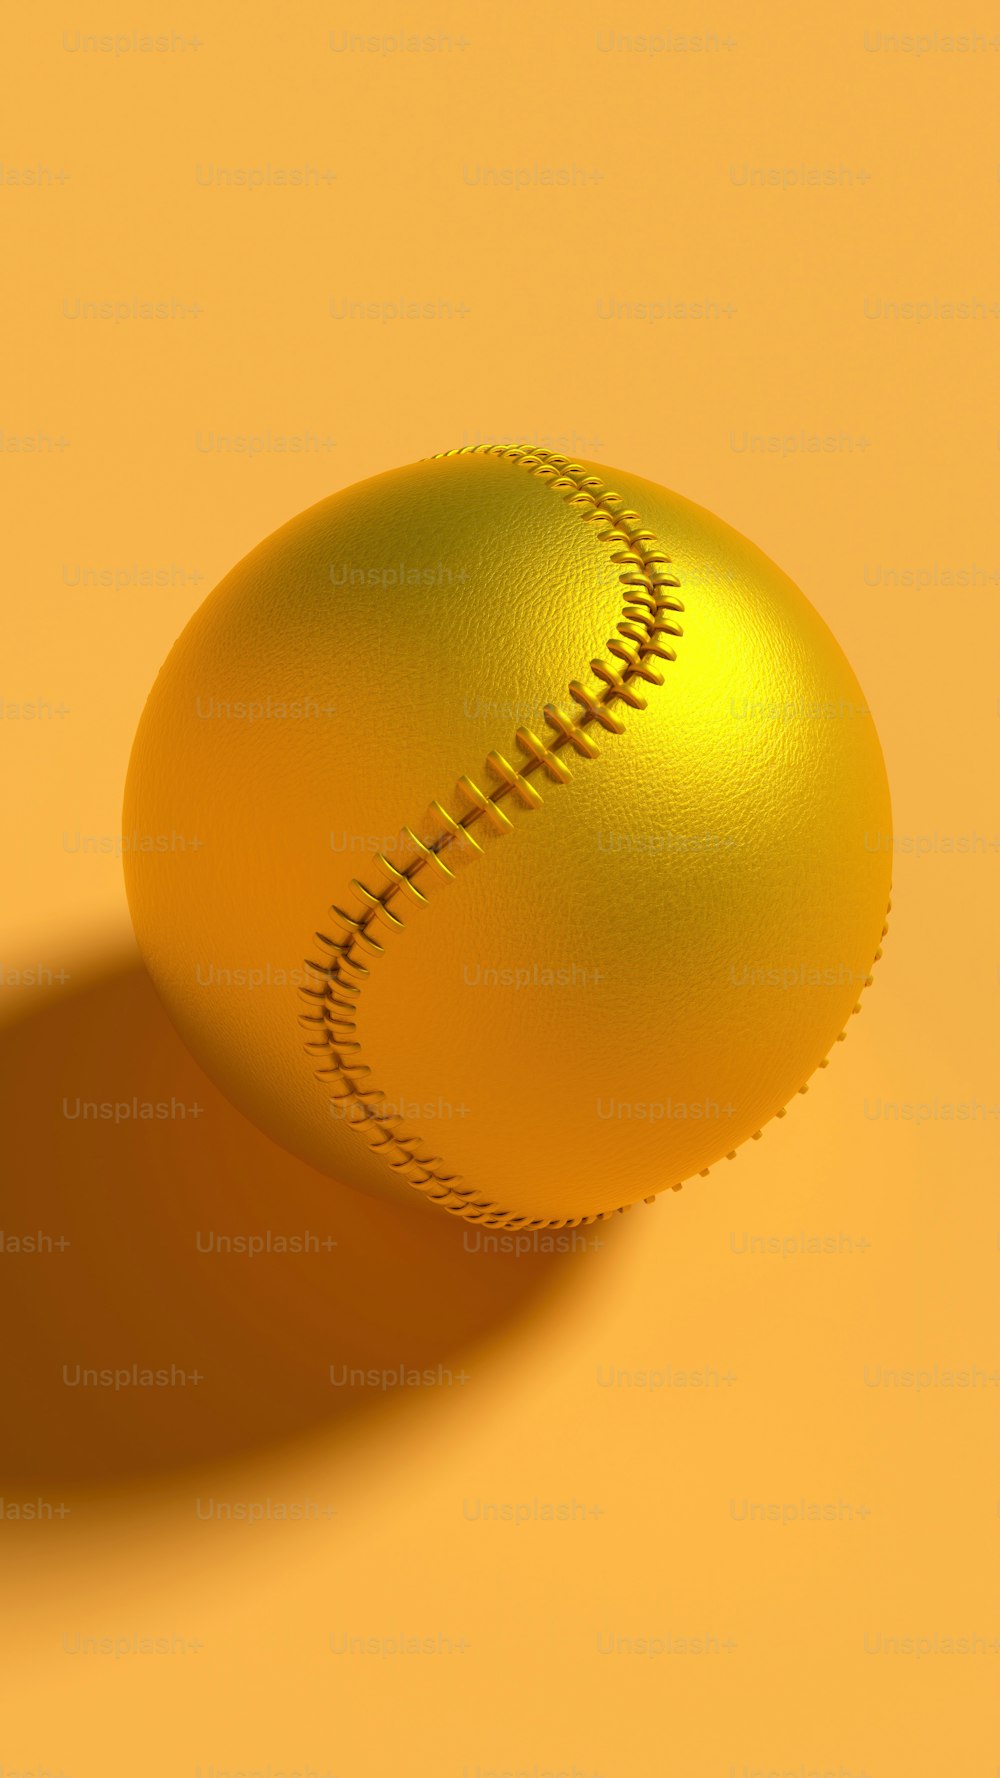 a golden baseball ball on a yellow background